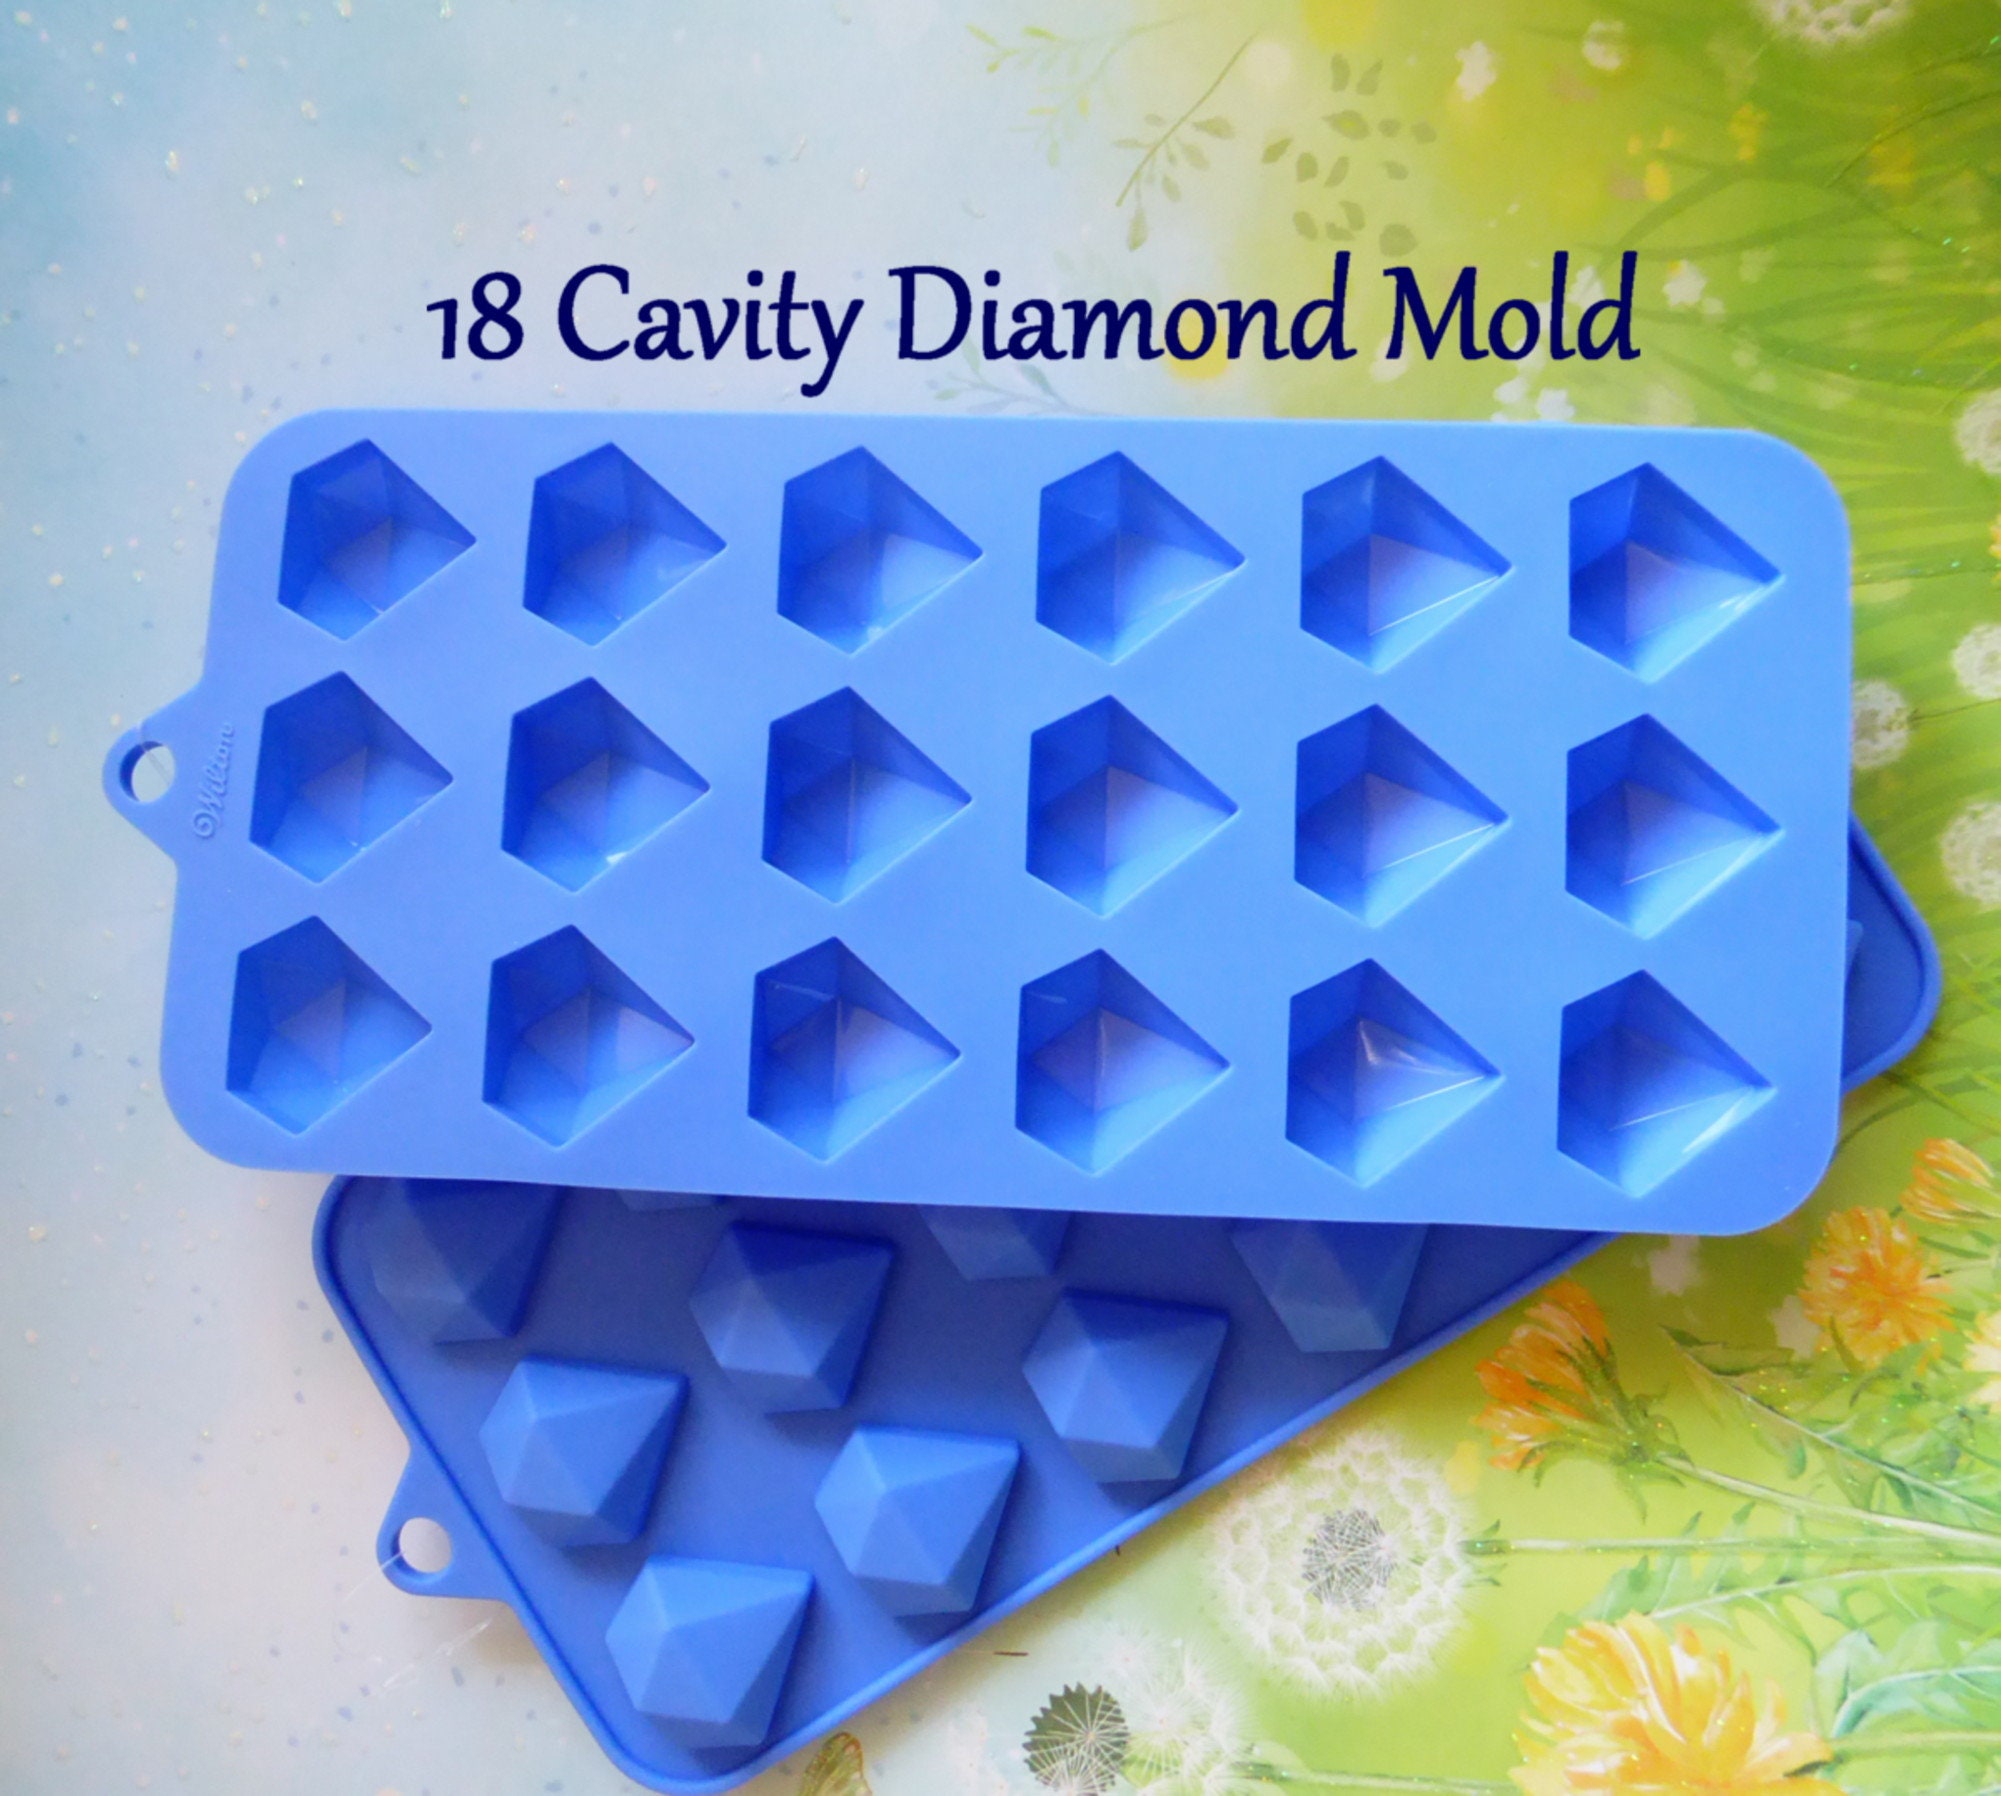 Wilton Diamond Silicone Candy Mold, 18 Cavities